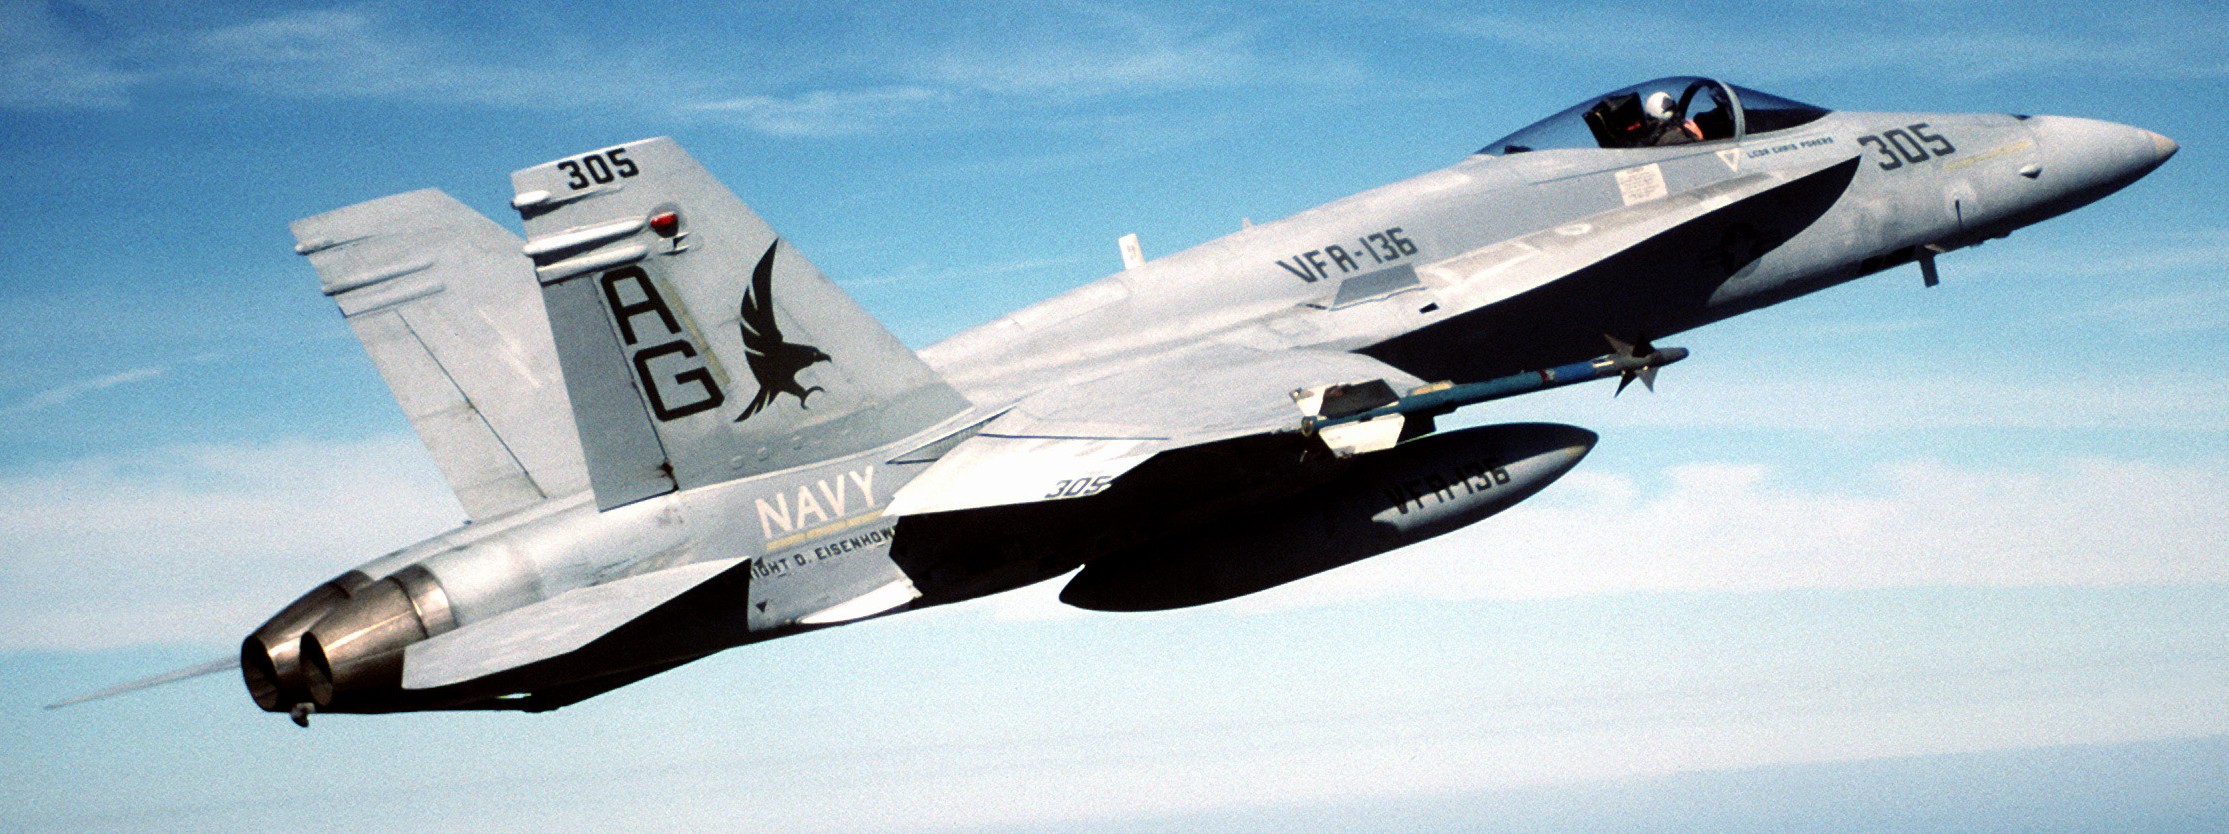 vfa-136 knighthawks strike fighter squadron f/a-18a hornet 1989 95 cvw-7